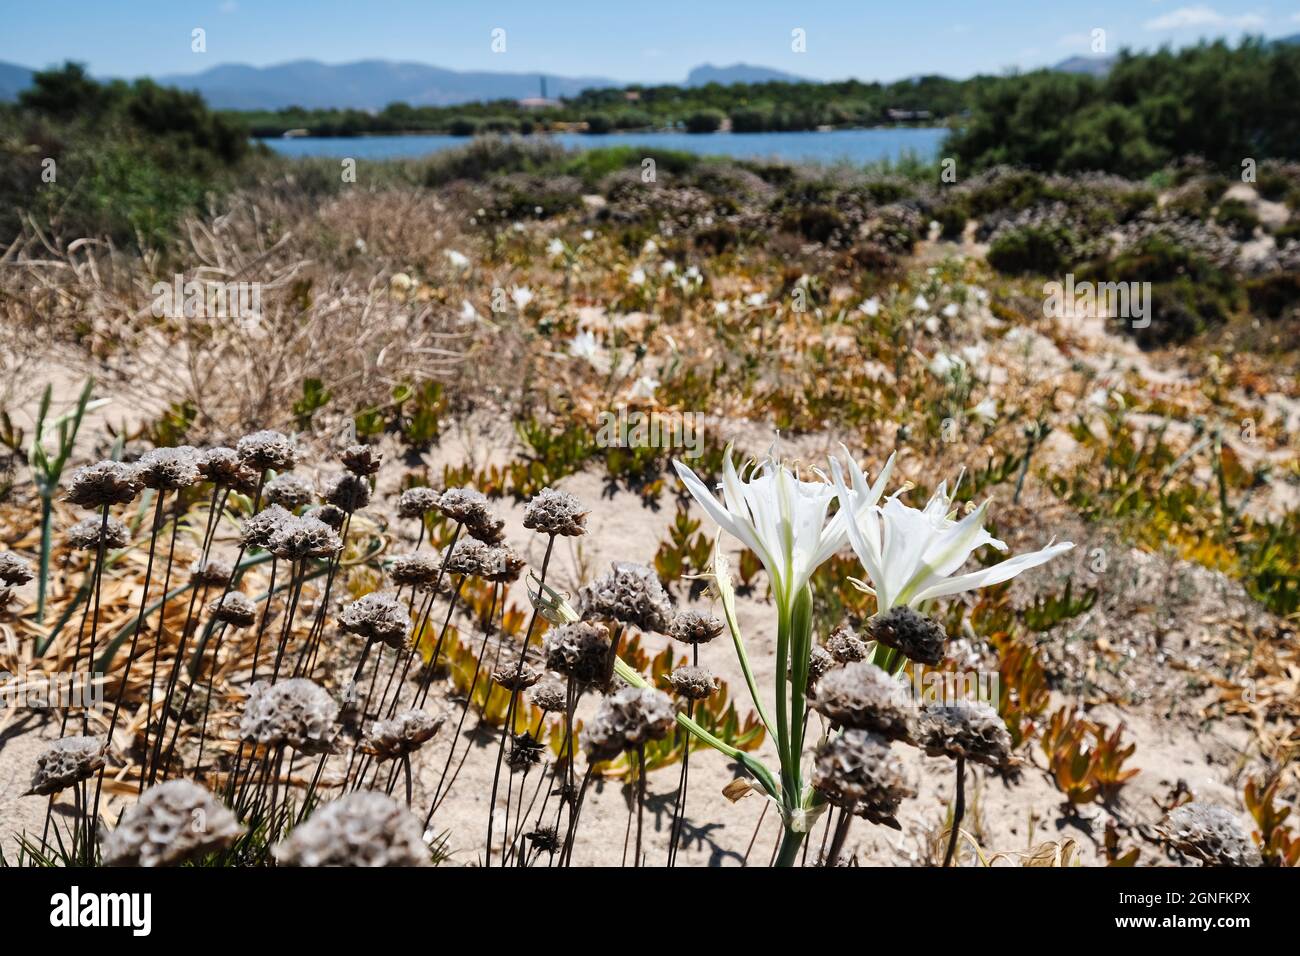 Flora on the sand dune near the Coghinas lake in Sardinia Stock Photo